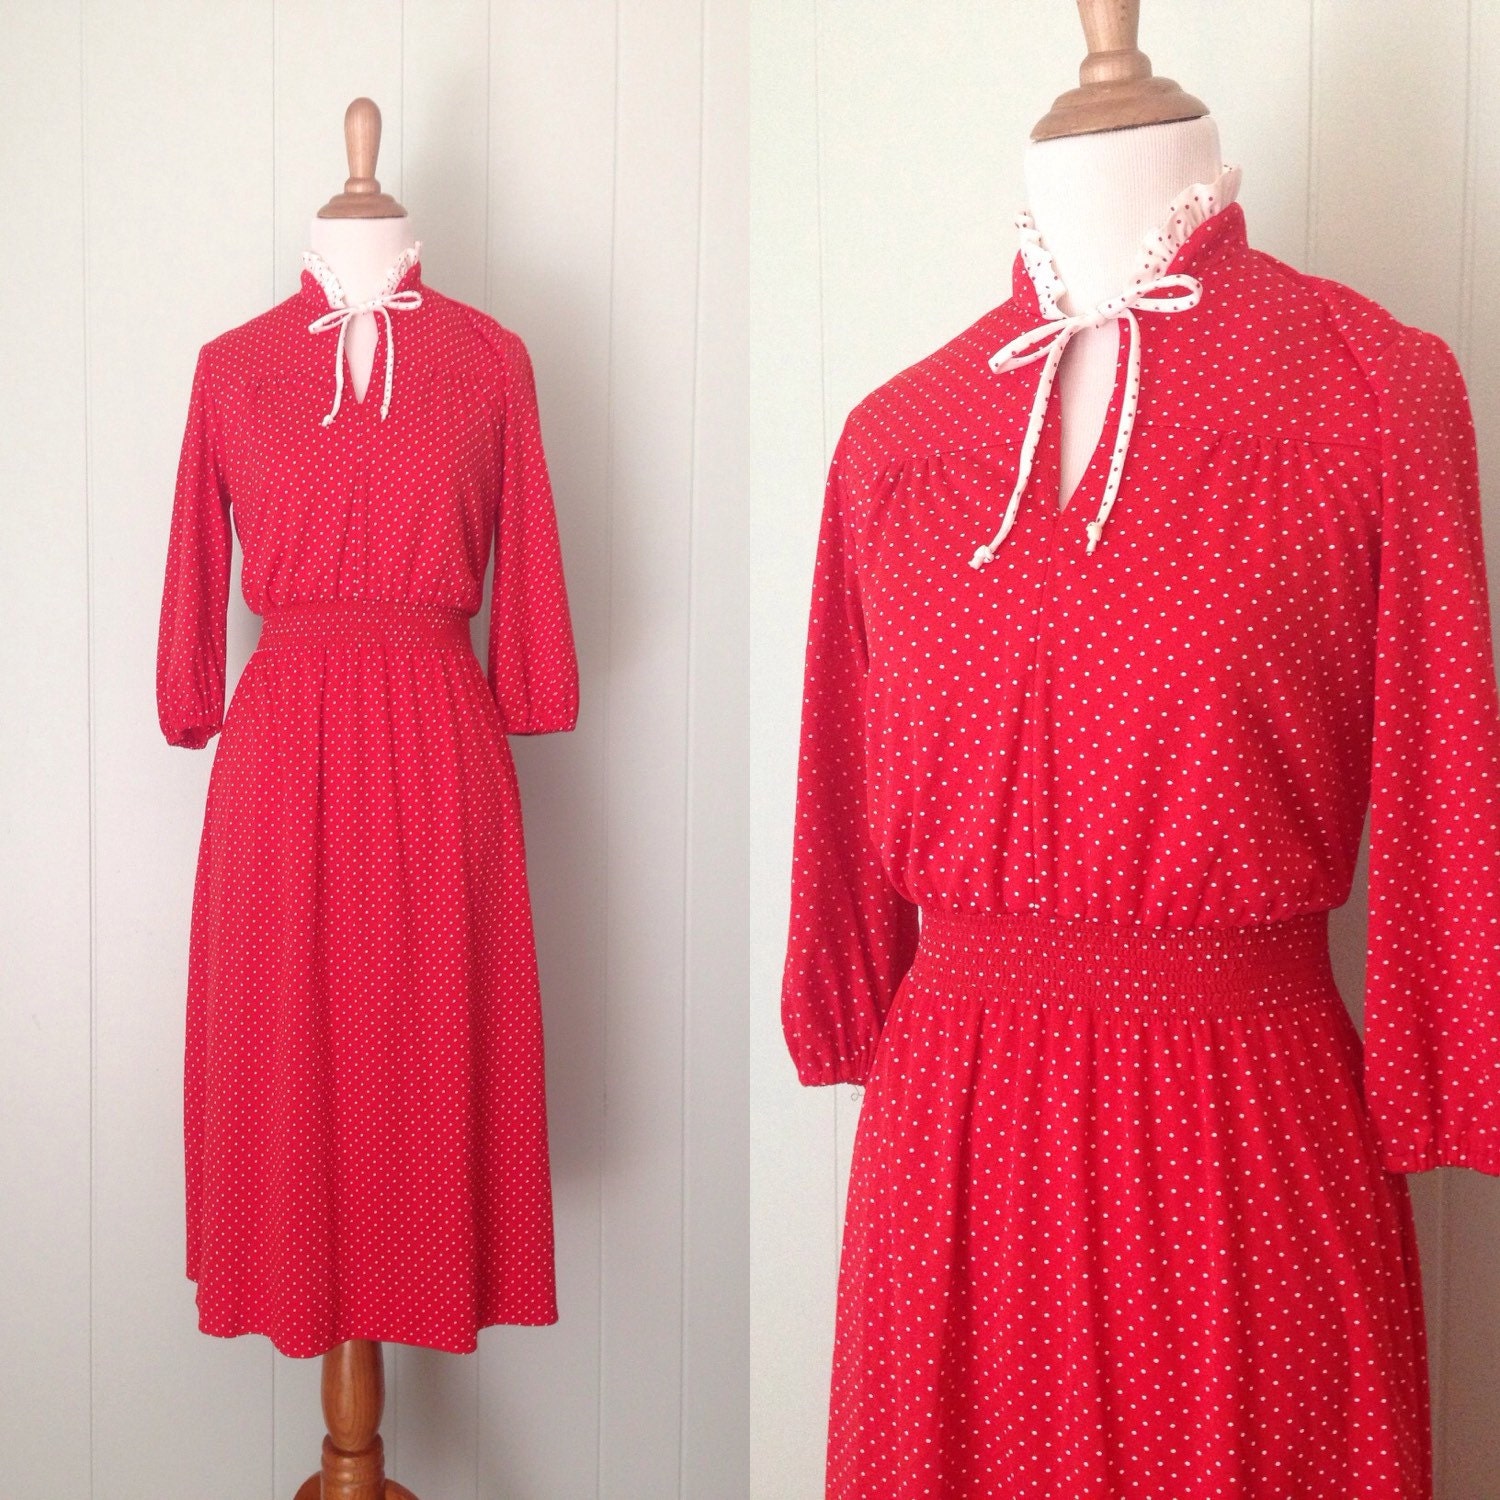 1970s Red Polka Dot Dress 70s Swiss Dot Dress Vintage